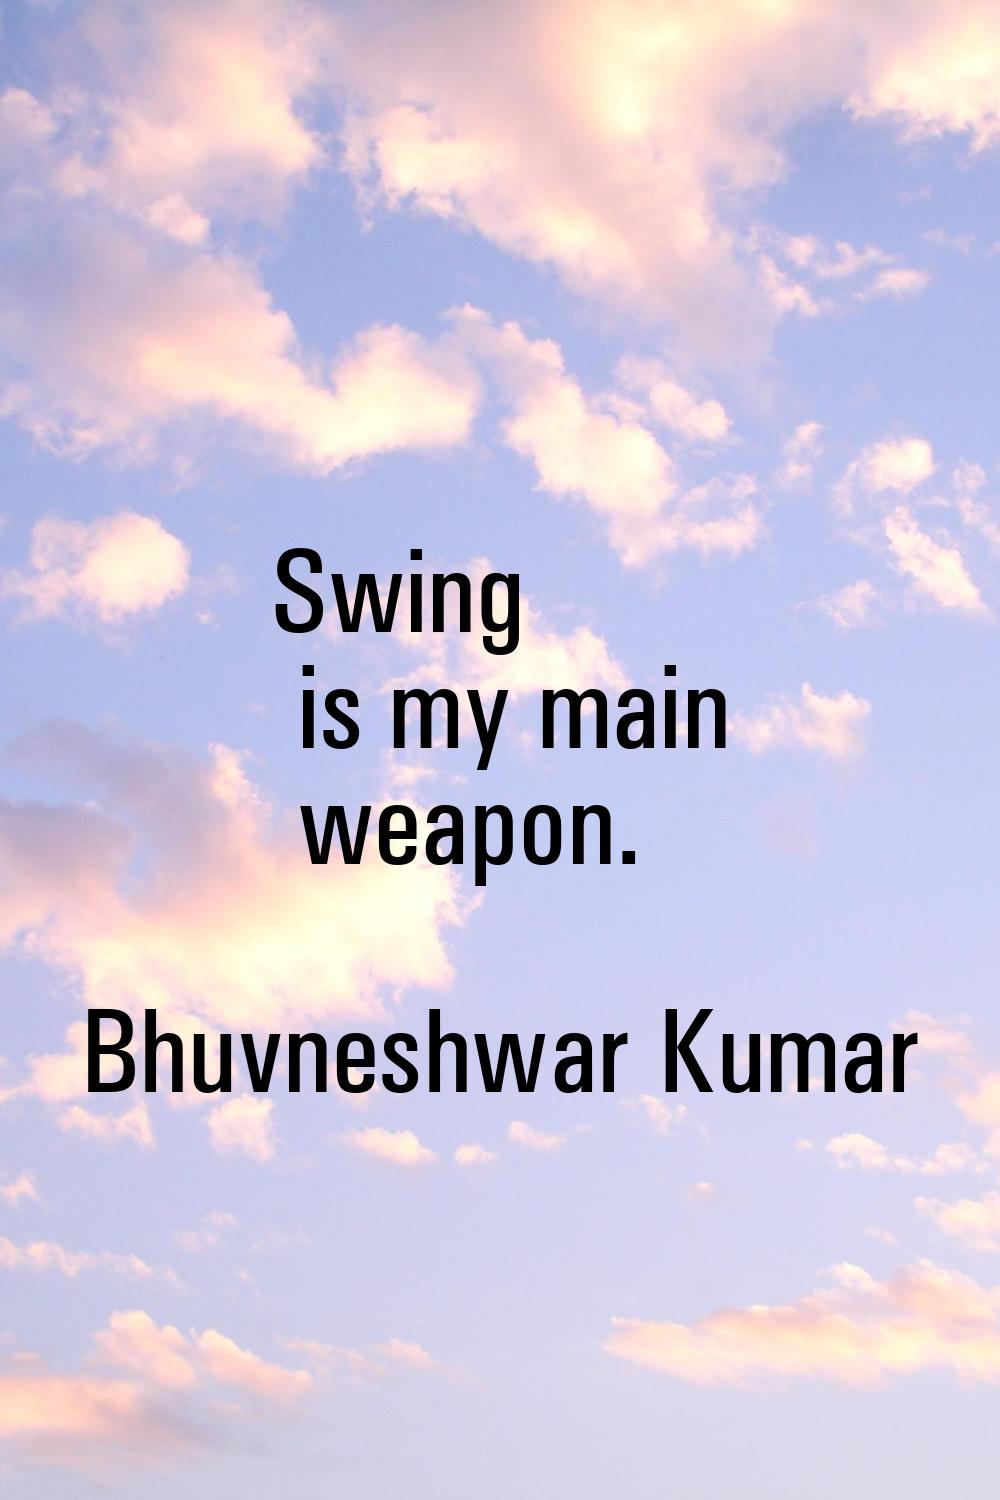 Swing is my main weapon.